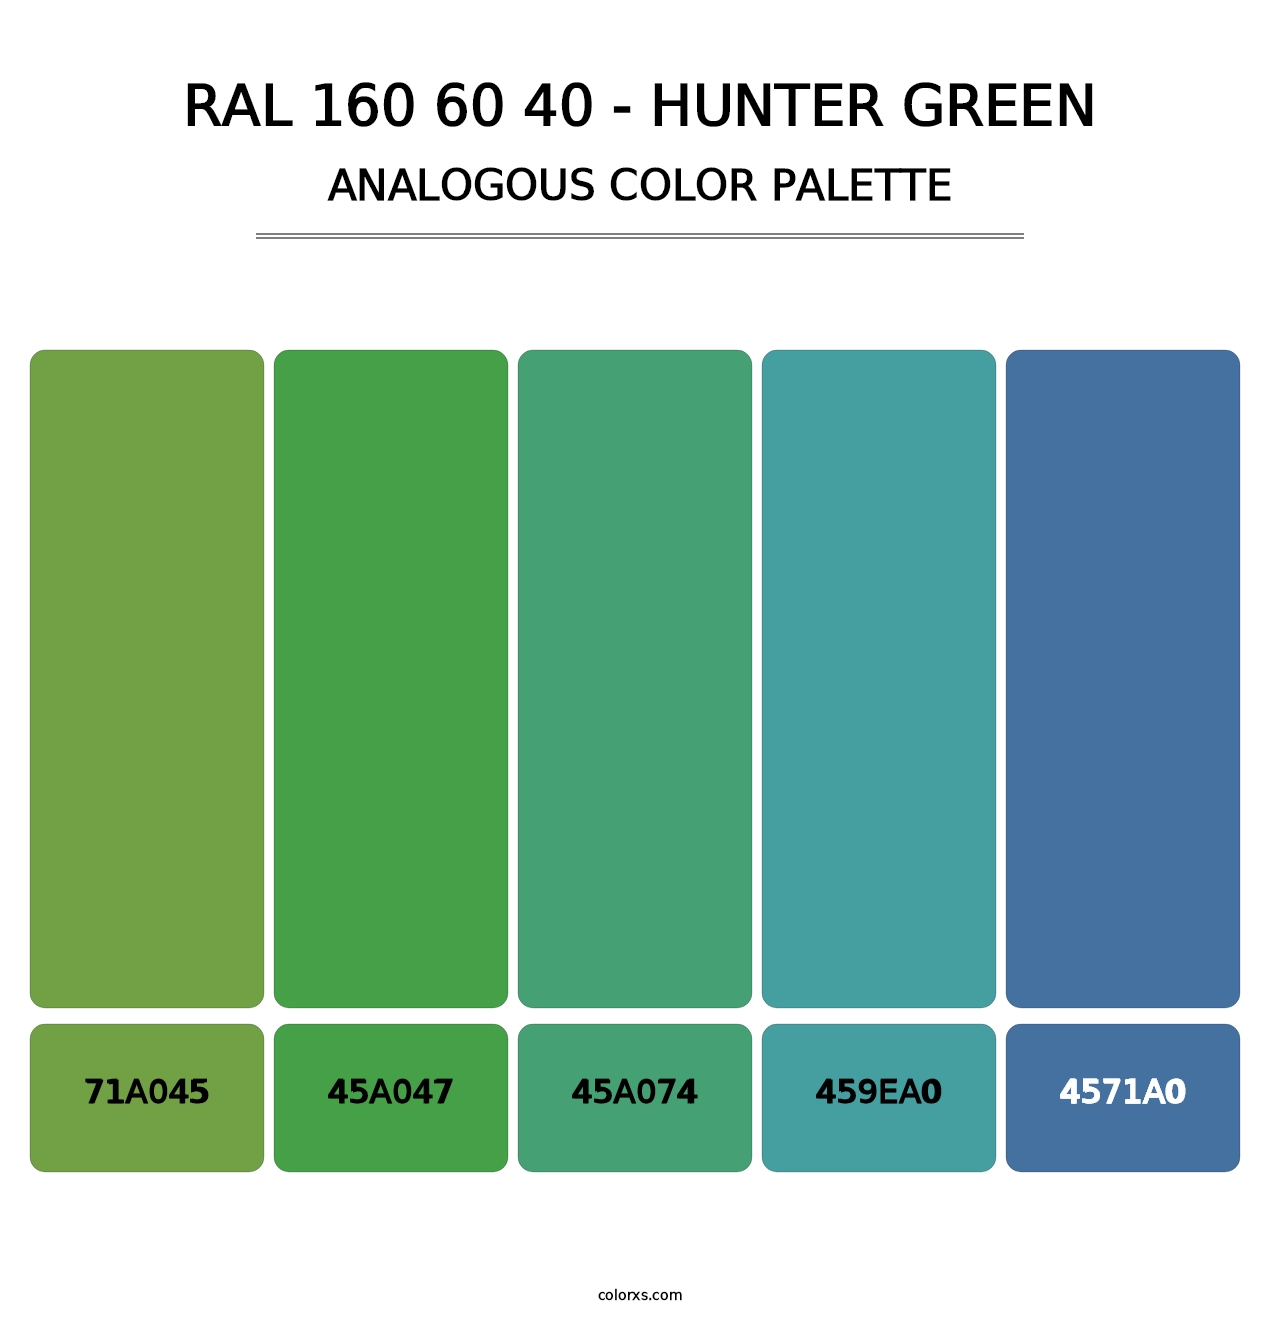 RAL 160 60 40 - Hunter Green - Analogous Color Palette